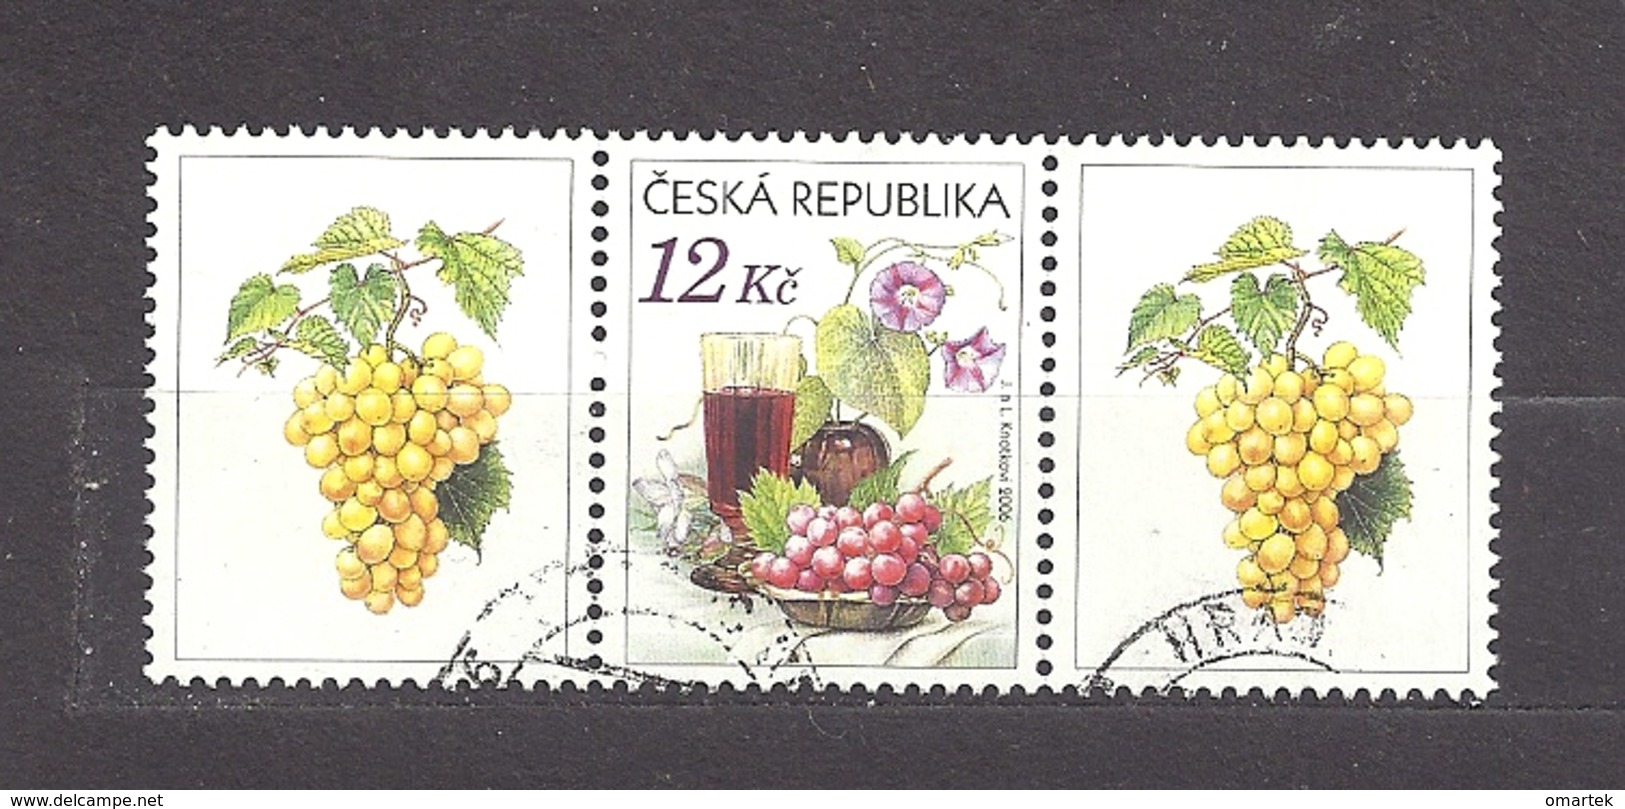 Czech Republic 2006 ⊙ Mi 462 Zf Sc 3296 Still Life With Grape, Glass Of Red Wine And Flowers.Tschechische Republik. C1 - Oblitérés